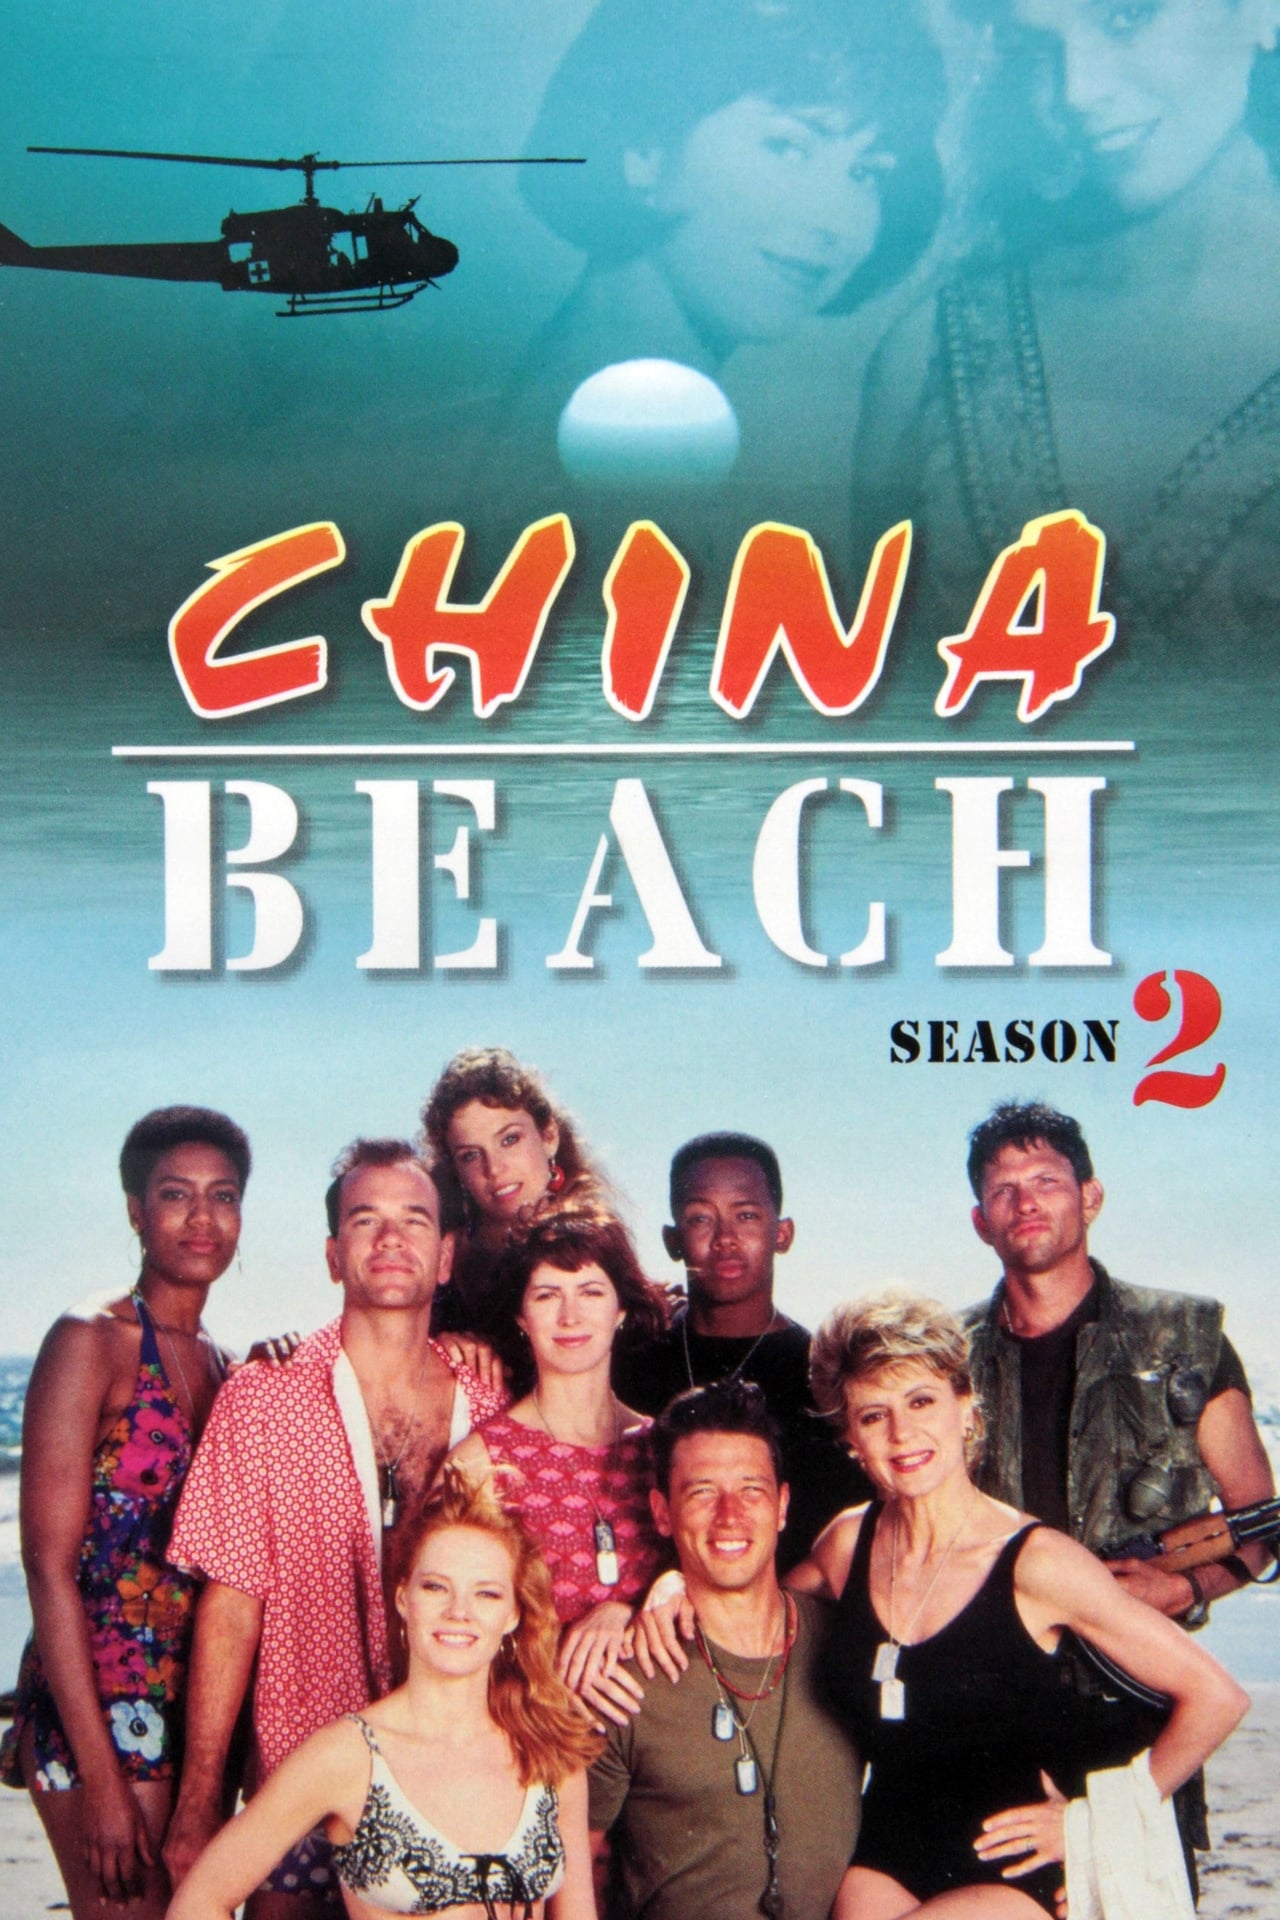 China Beach Season 2